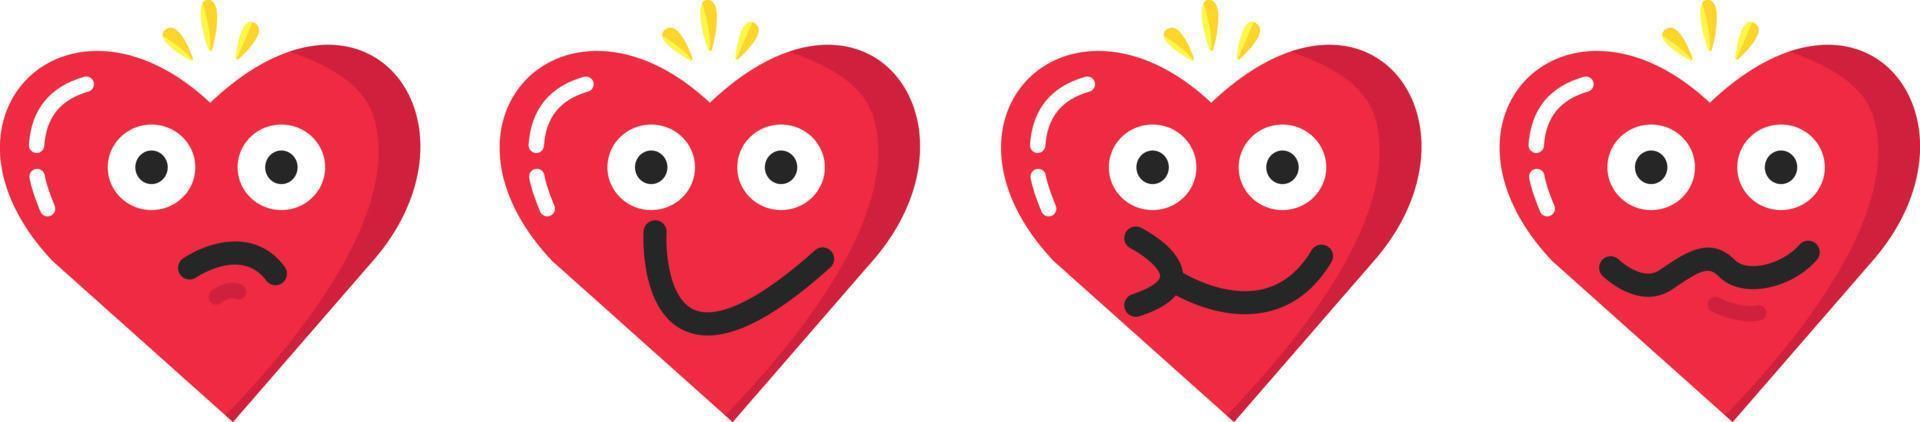 Valentijn emoji emoticon rood hart duivel onheil boos vector